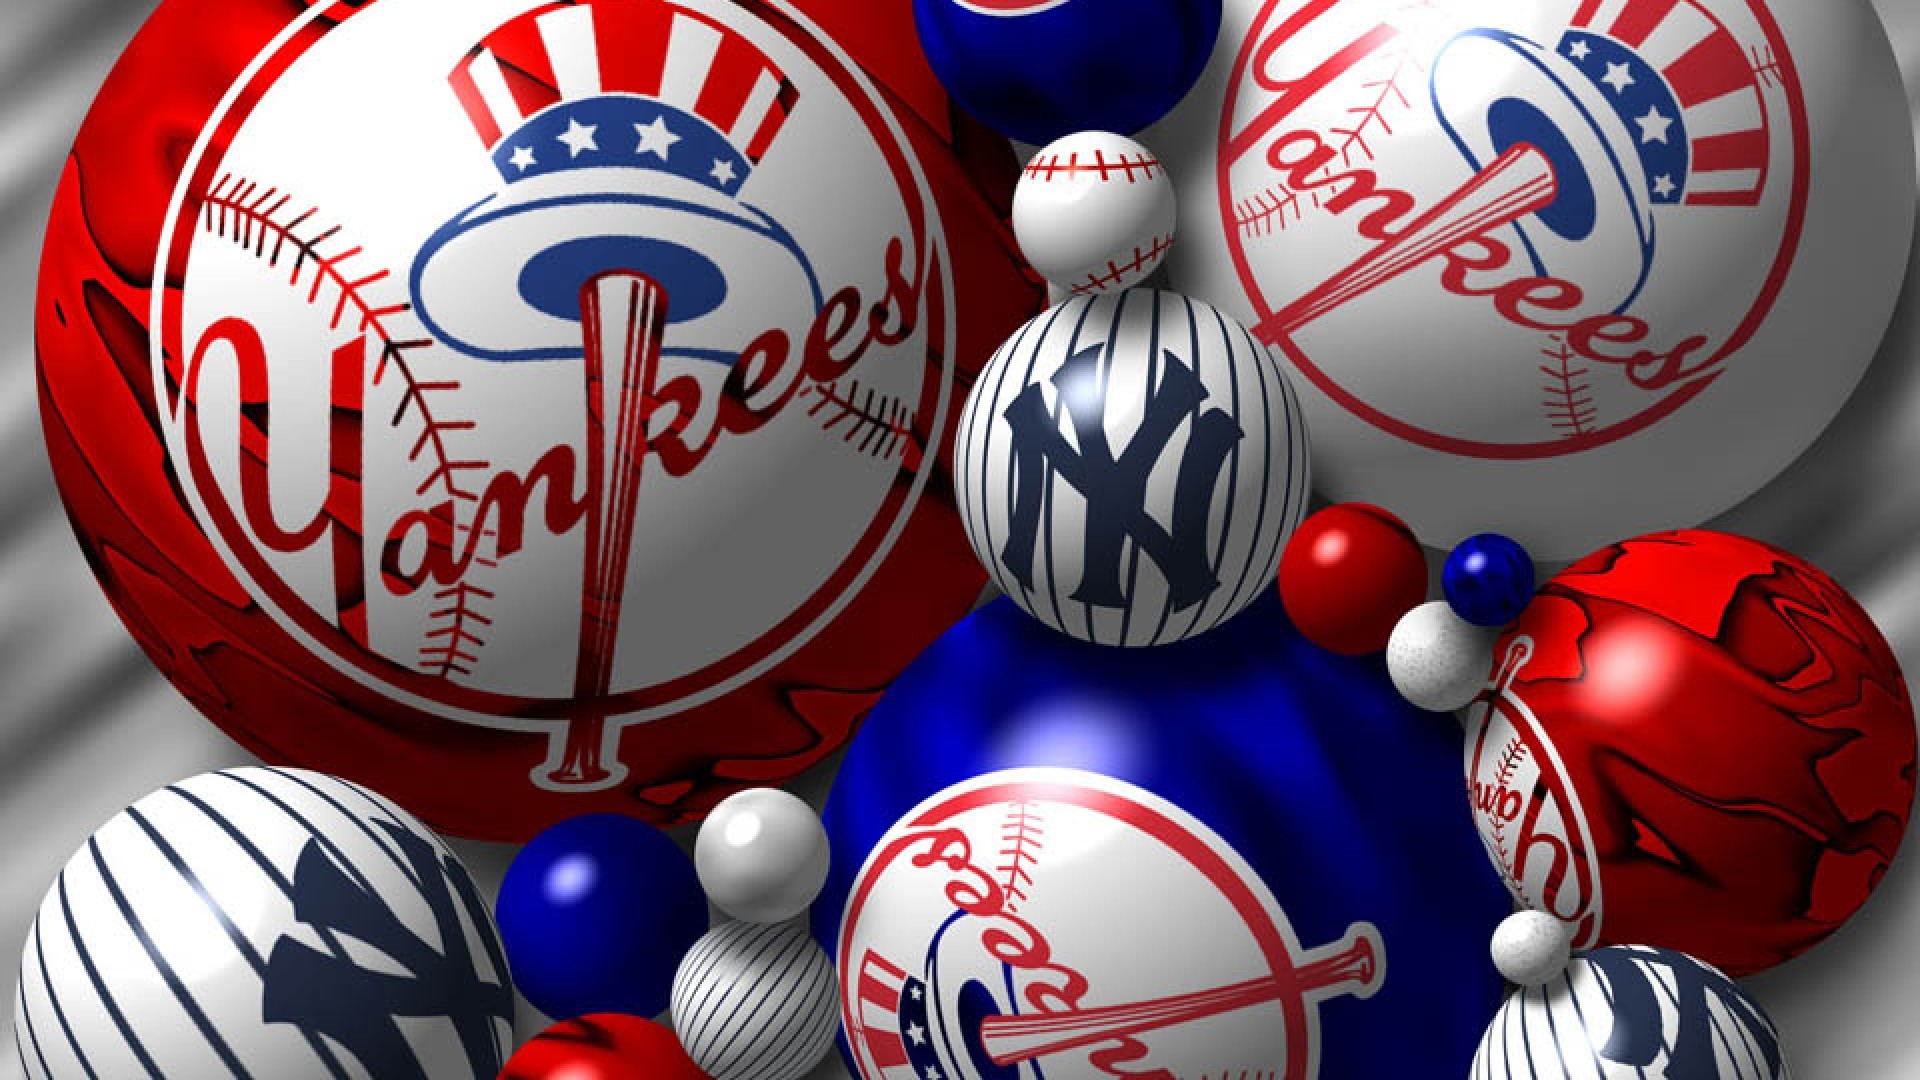 MLB New York Yankees Team Logo wallpaper HD. Free desktop